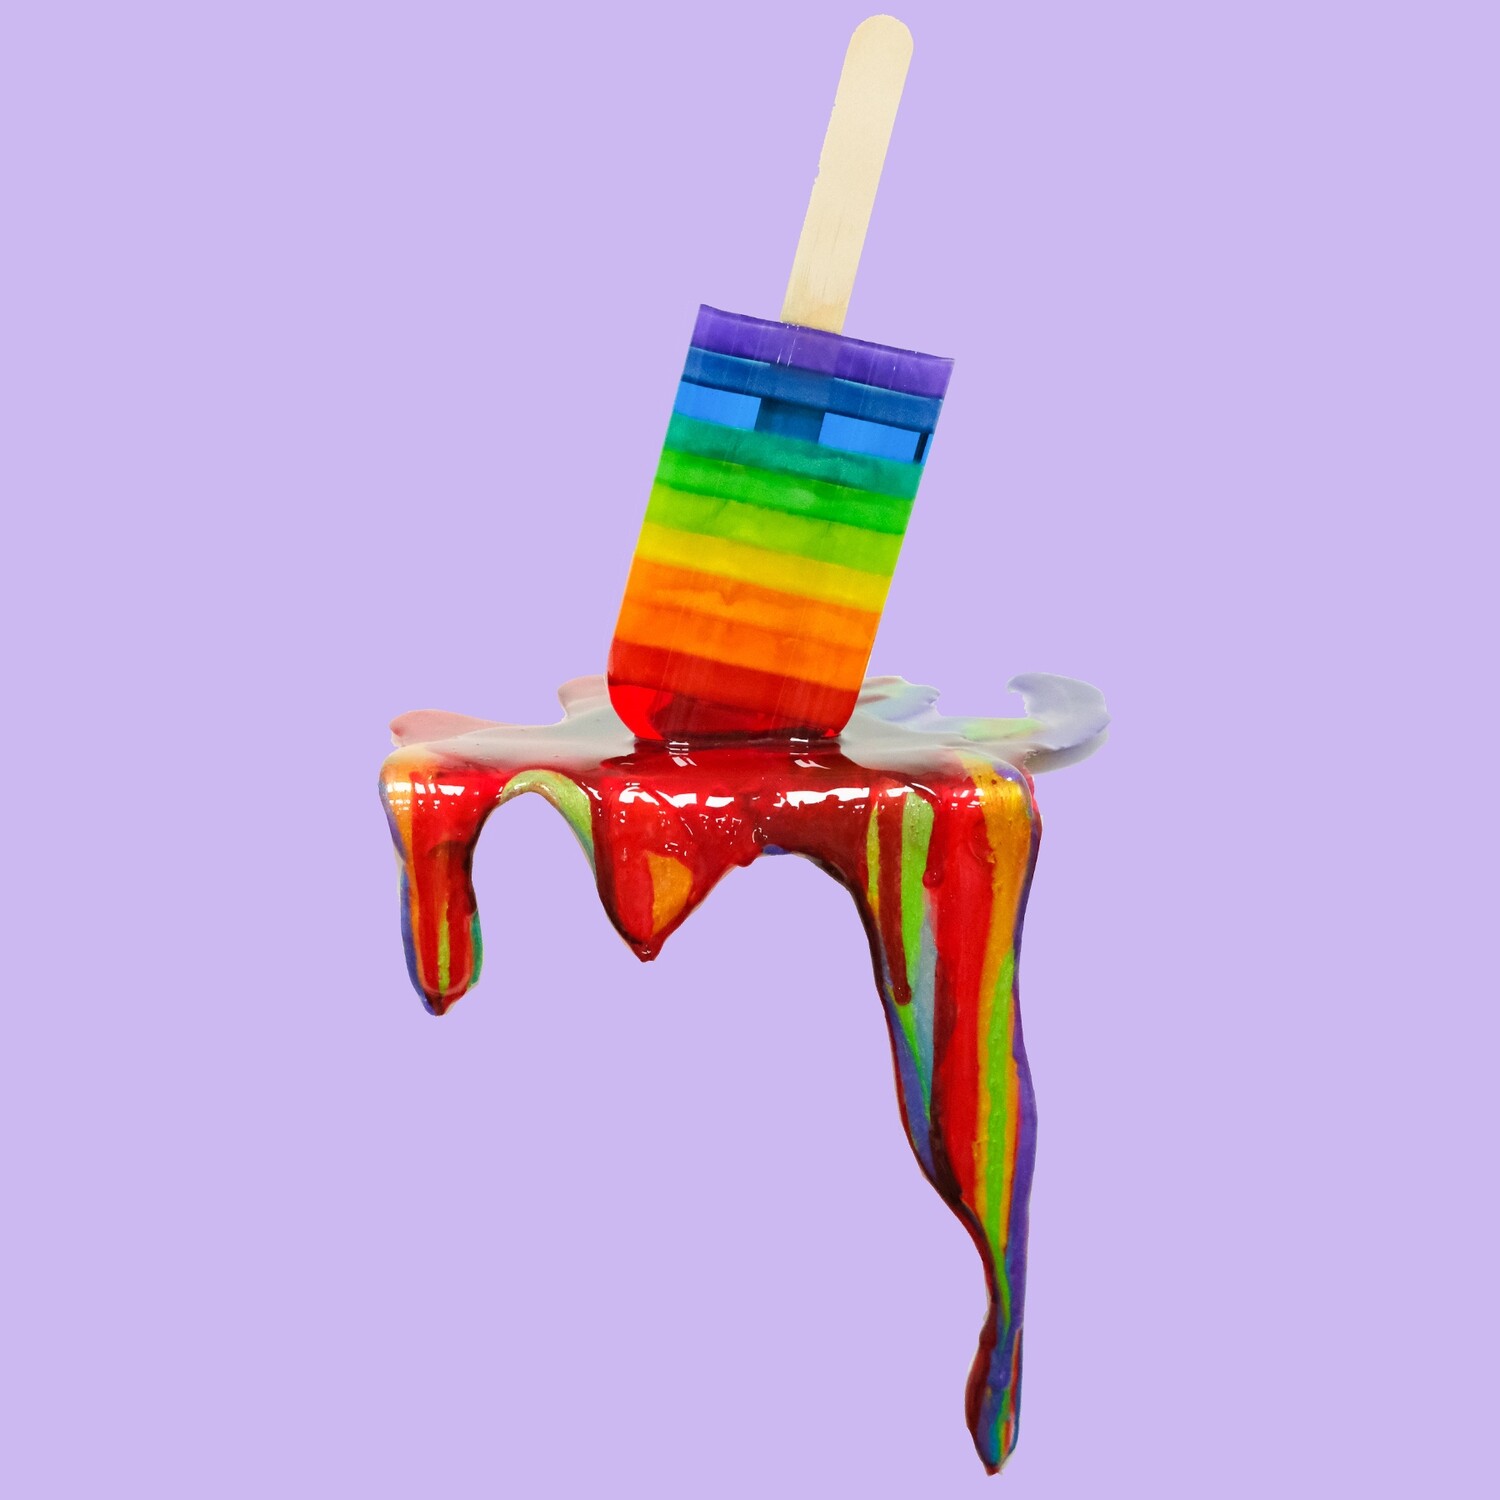 Melting Popsicle Art - Big Double Rainbow Shelfie - Original Melting Pops